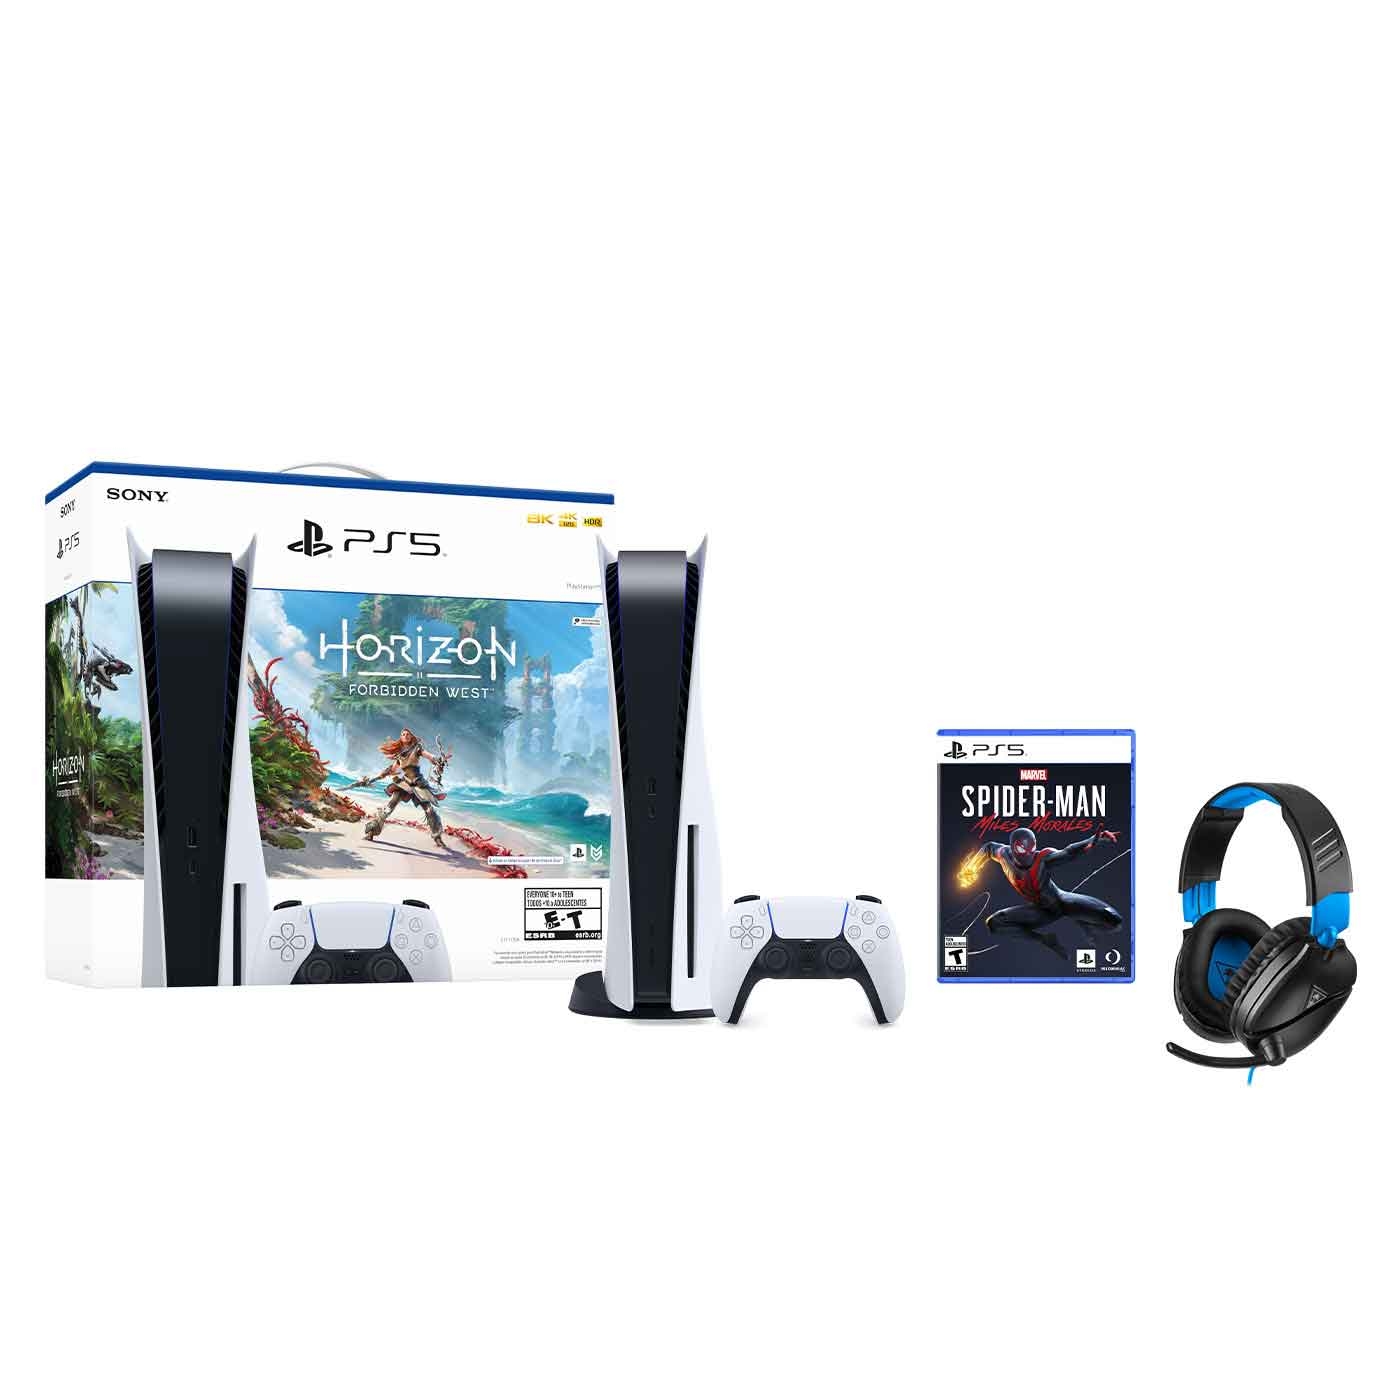 Consola PS5 Estándar 825GB + 1 Control Dualsense + Juego PS5 Spiderman + Audífono Recon 70P + Voucher para descargar Juego Digital Horizon Forbidden